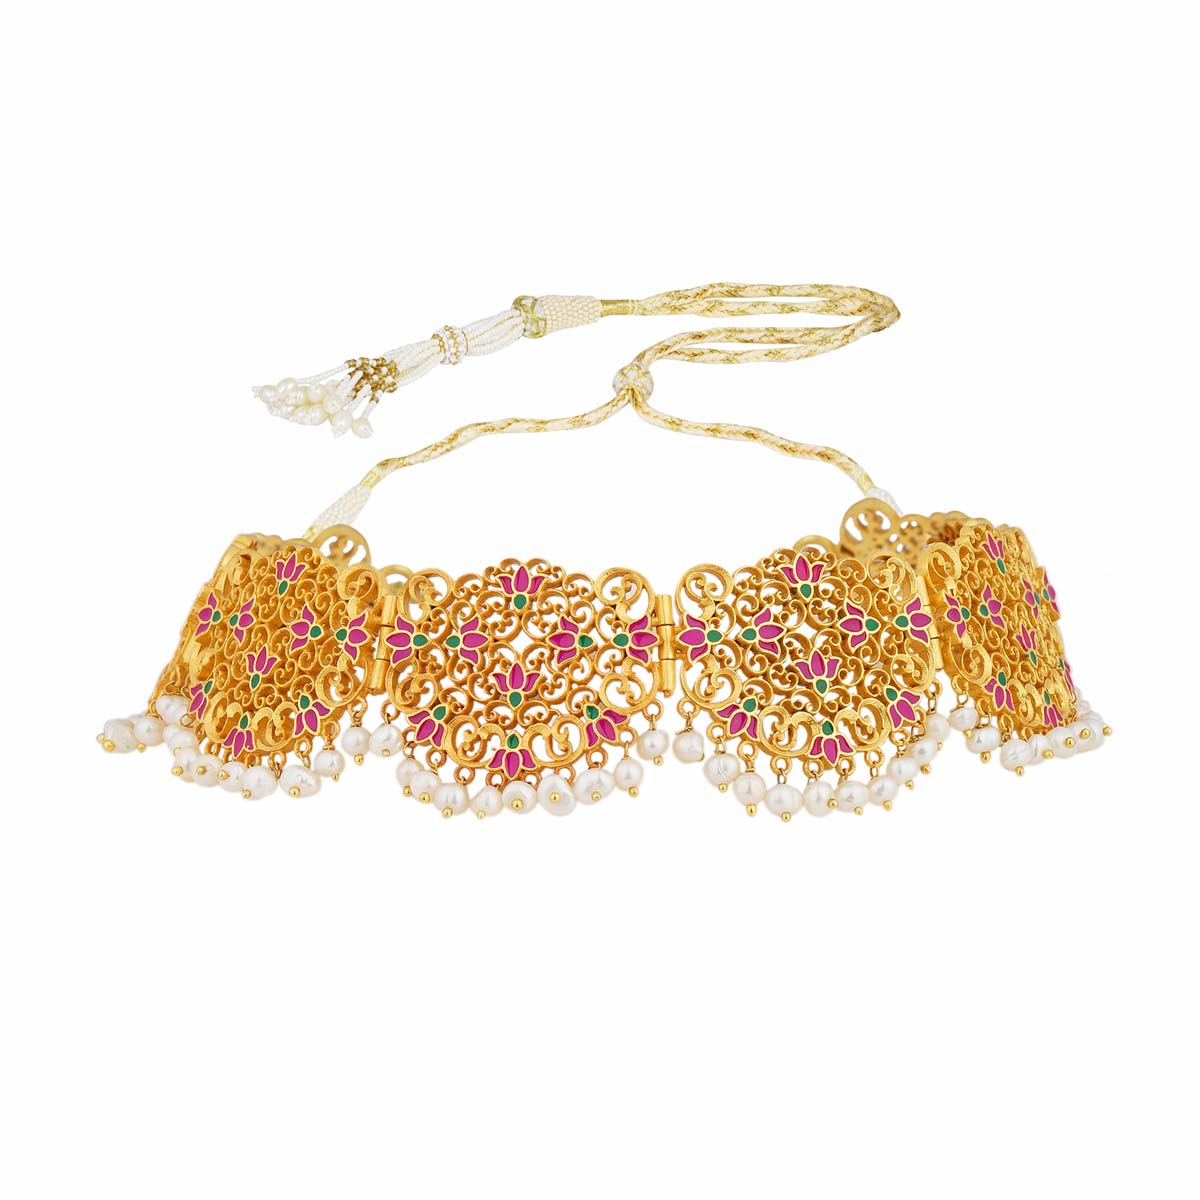 Lotus Lace Choker Necklace in Pink Enamel